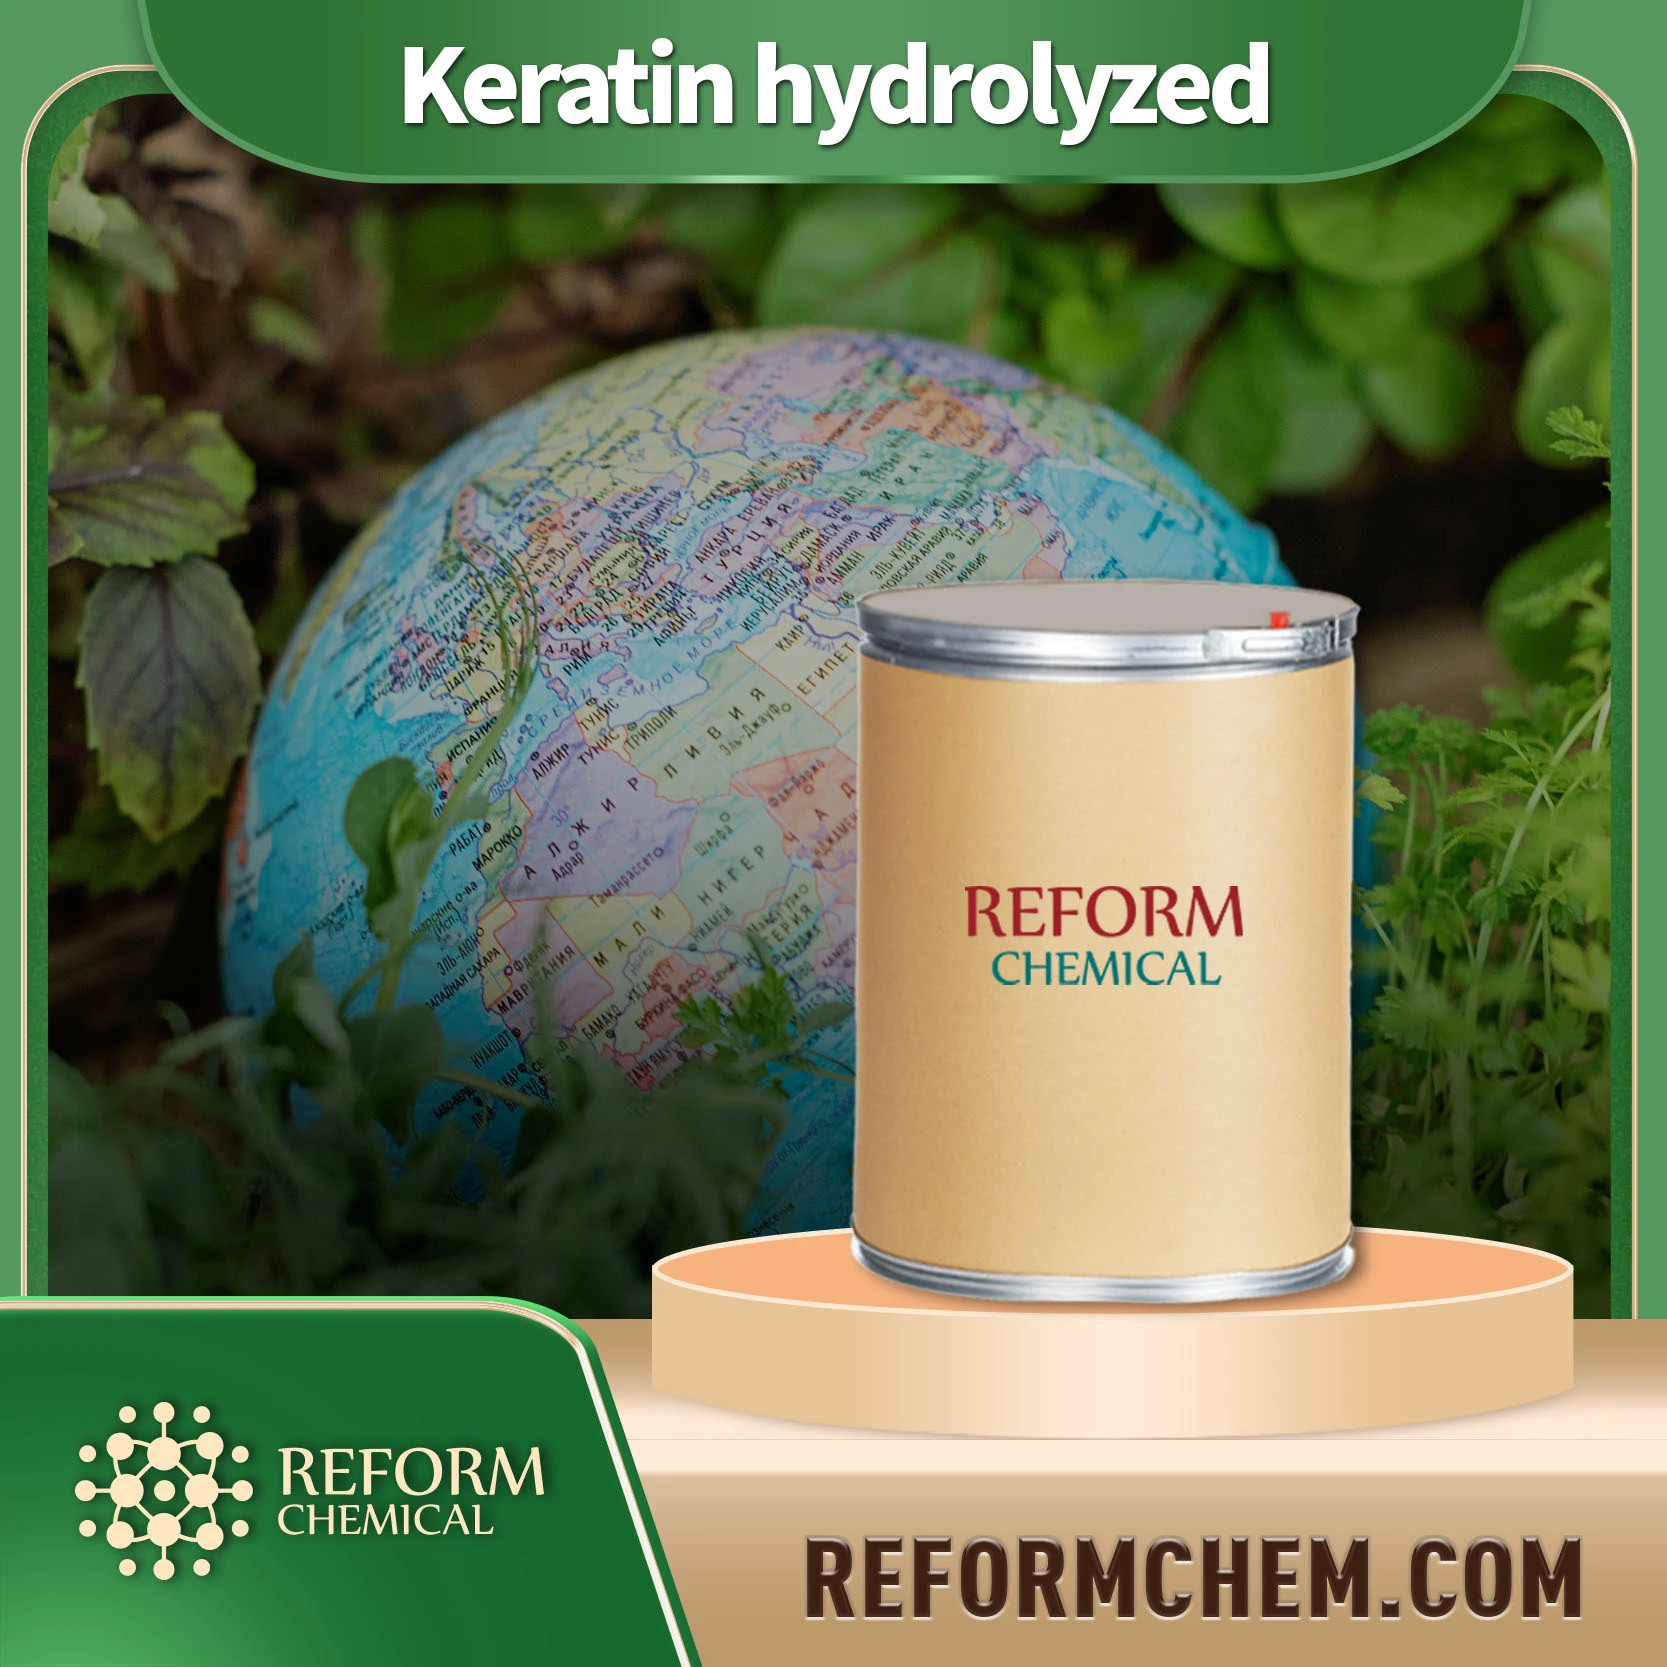 Keratin hydrolyzed